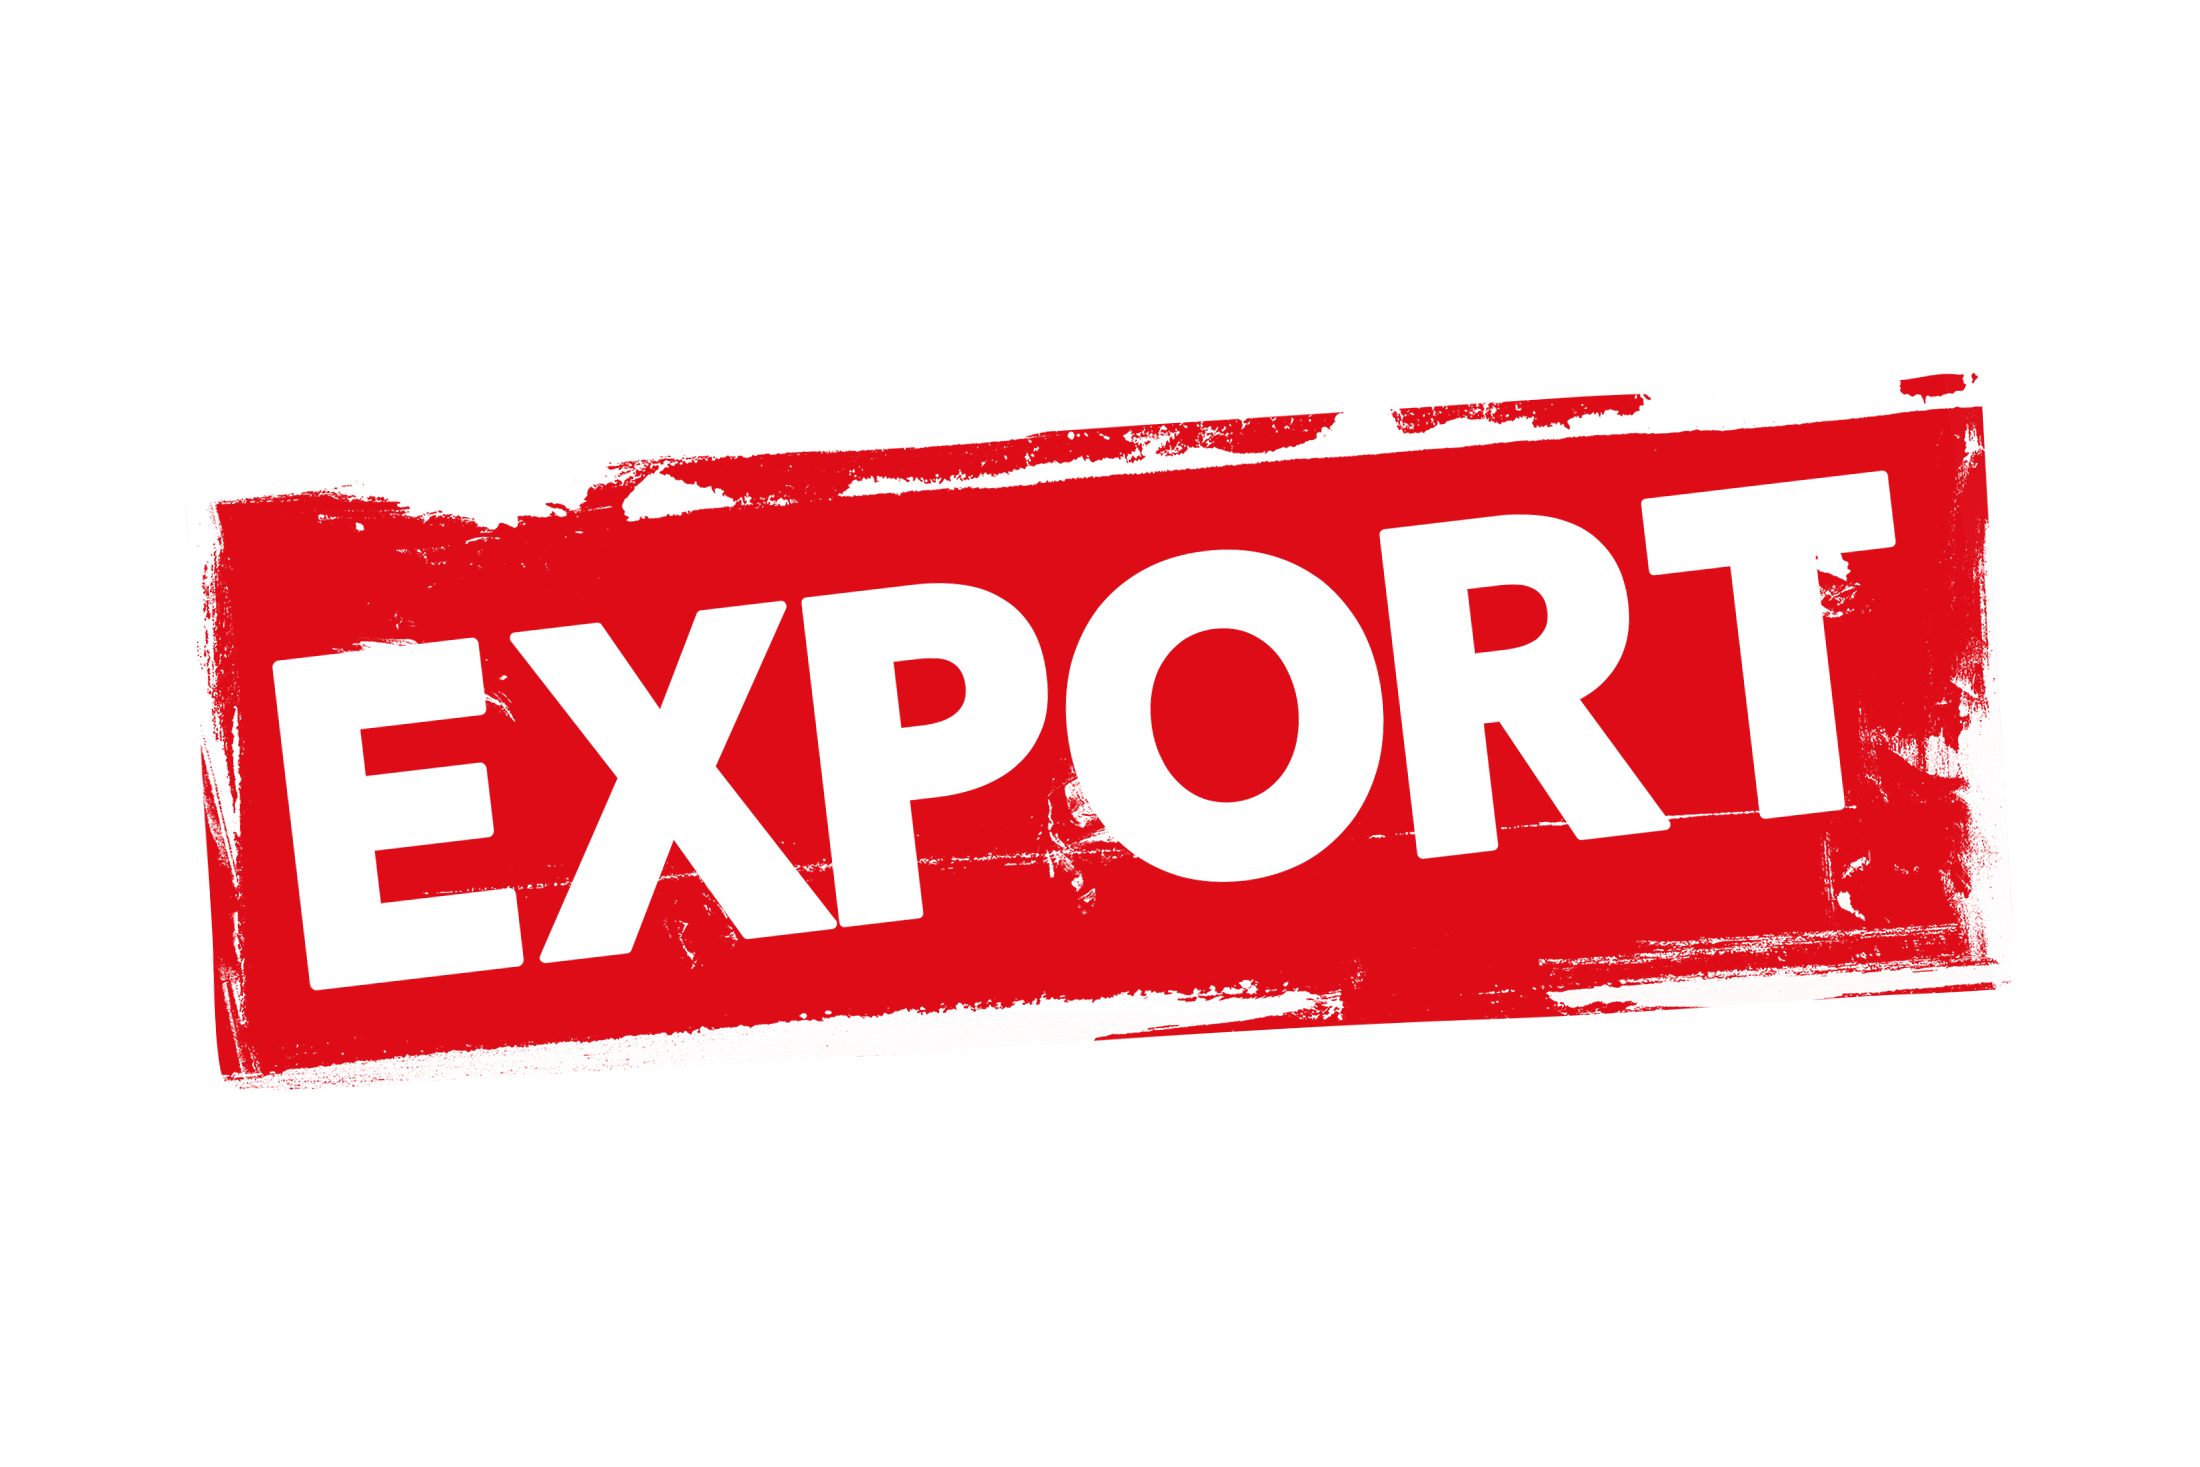 Grunge export label PSD